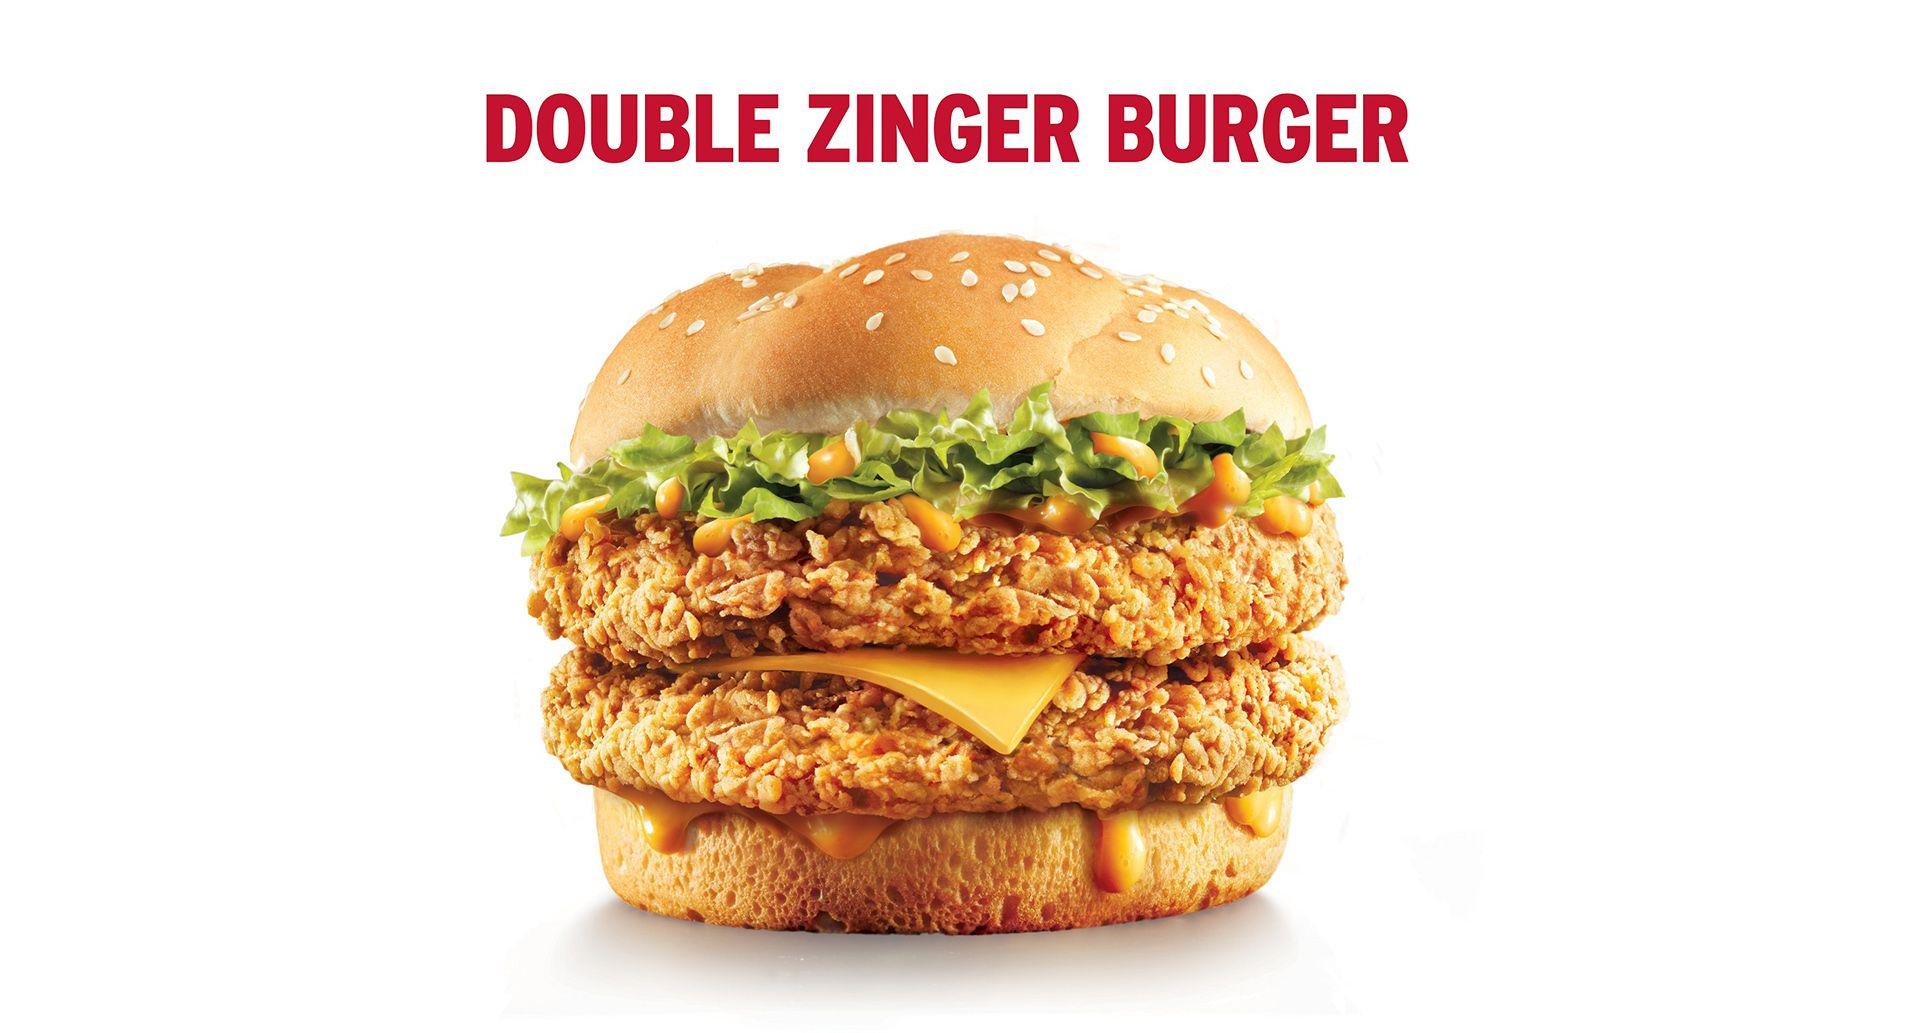 Zinger Burger Wallpaper: Find best latest Zinger Burger Wallpaper